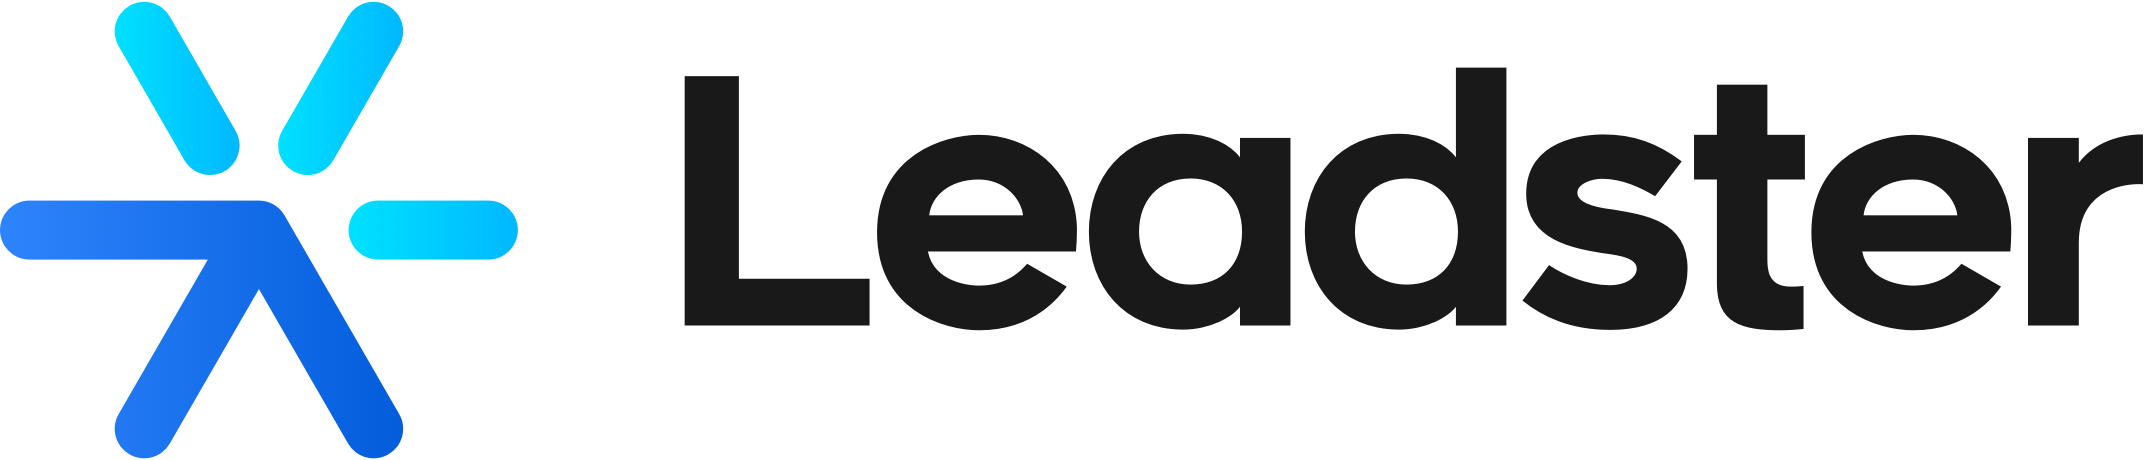 logo leadster